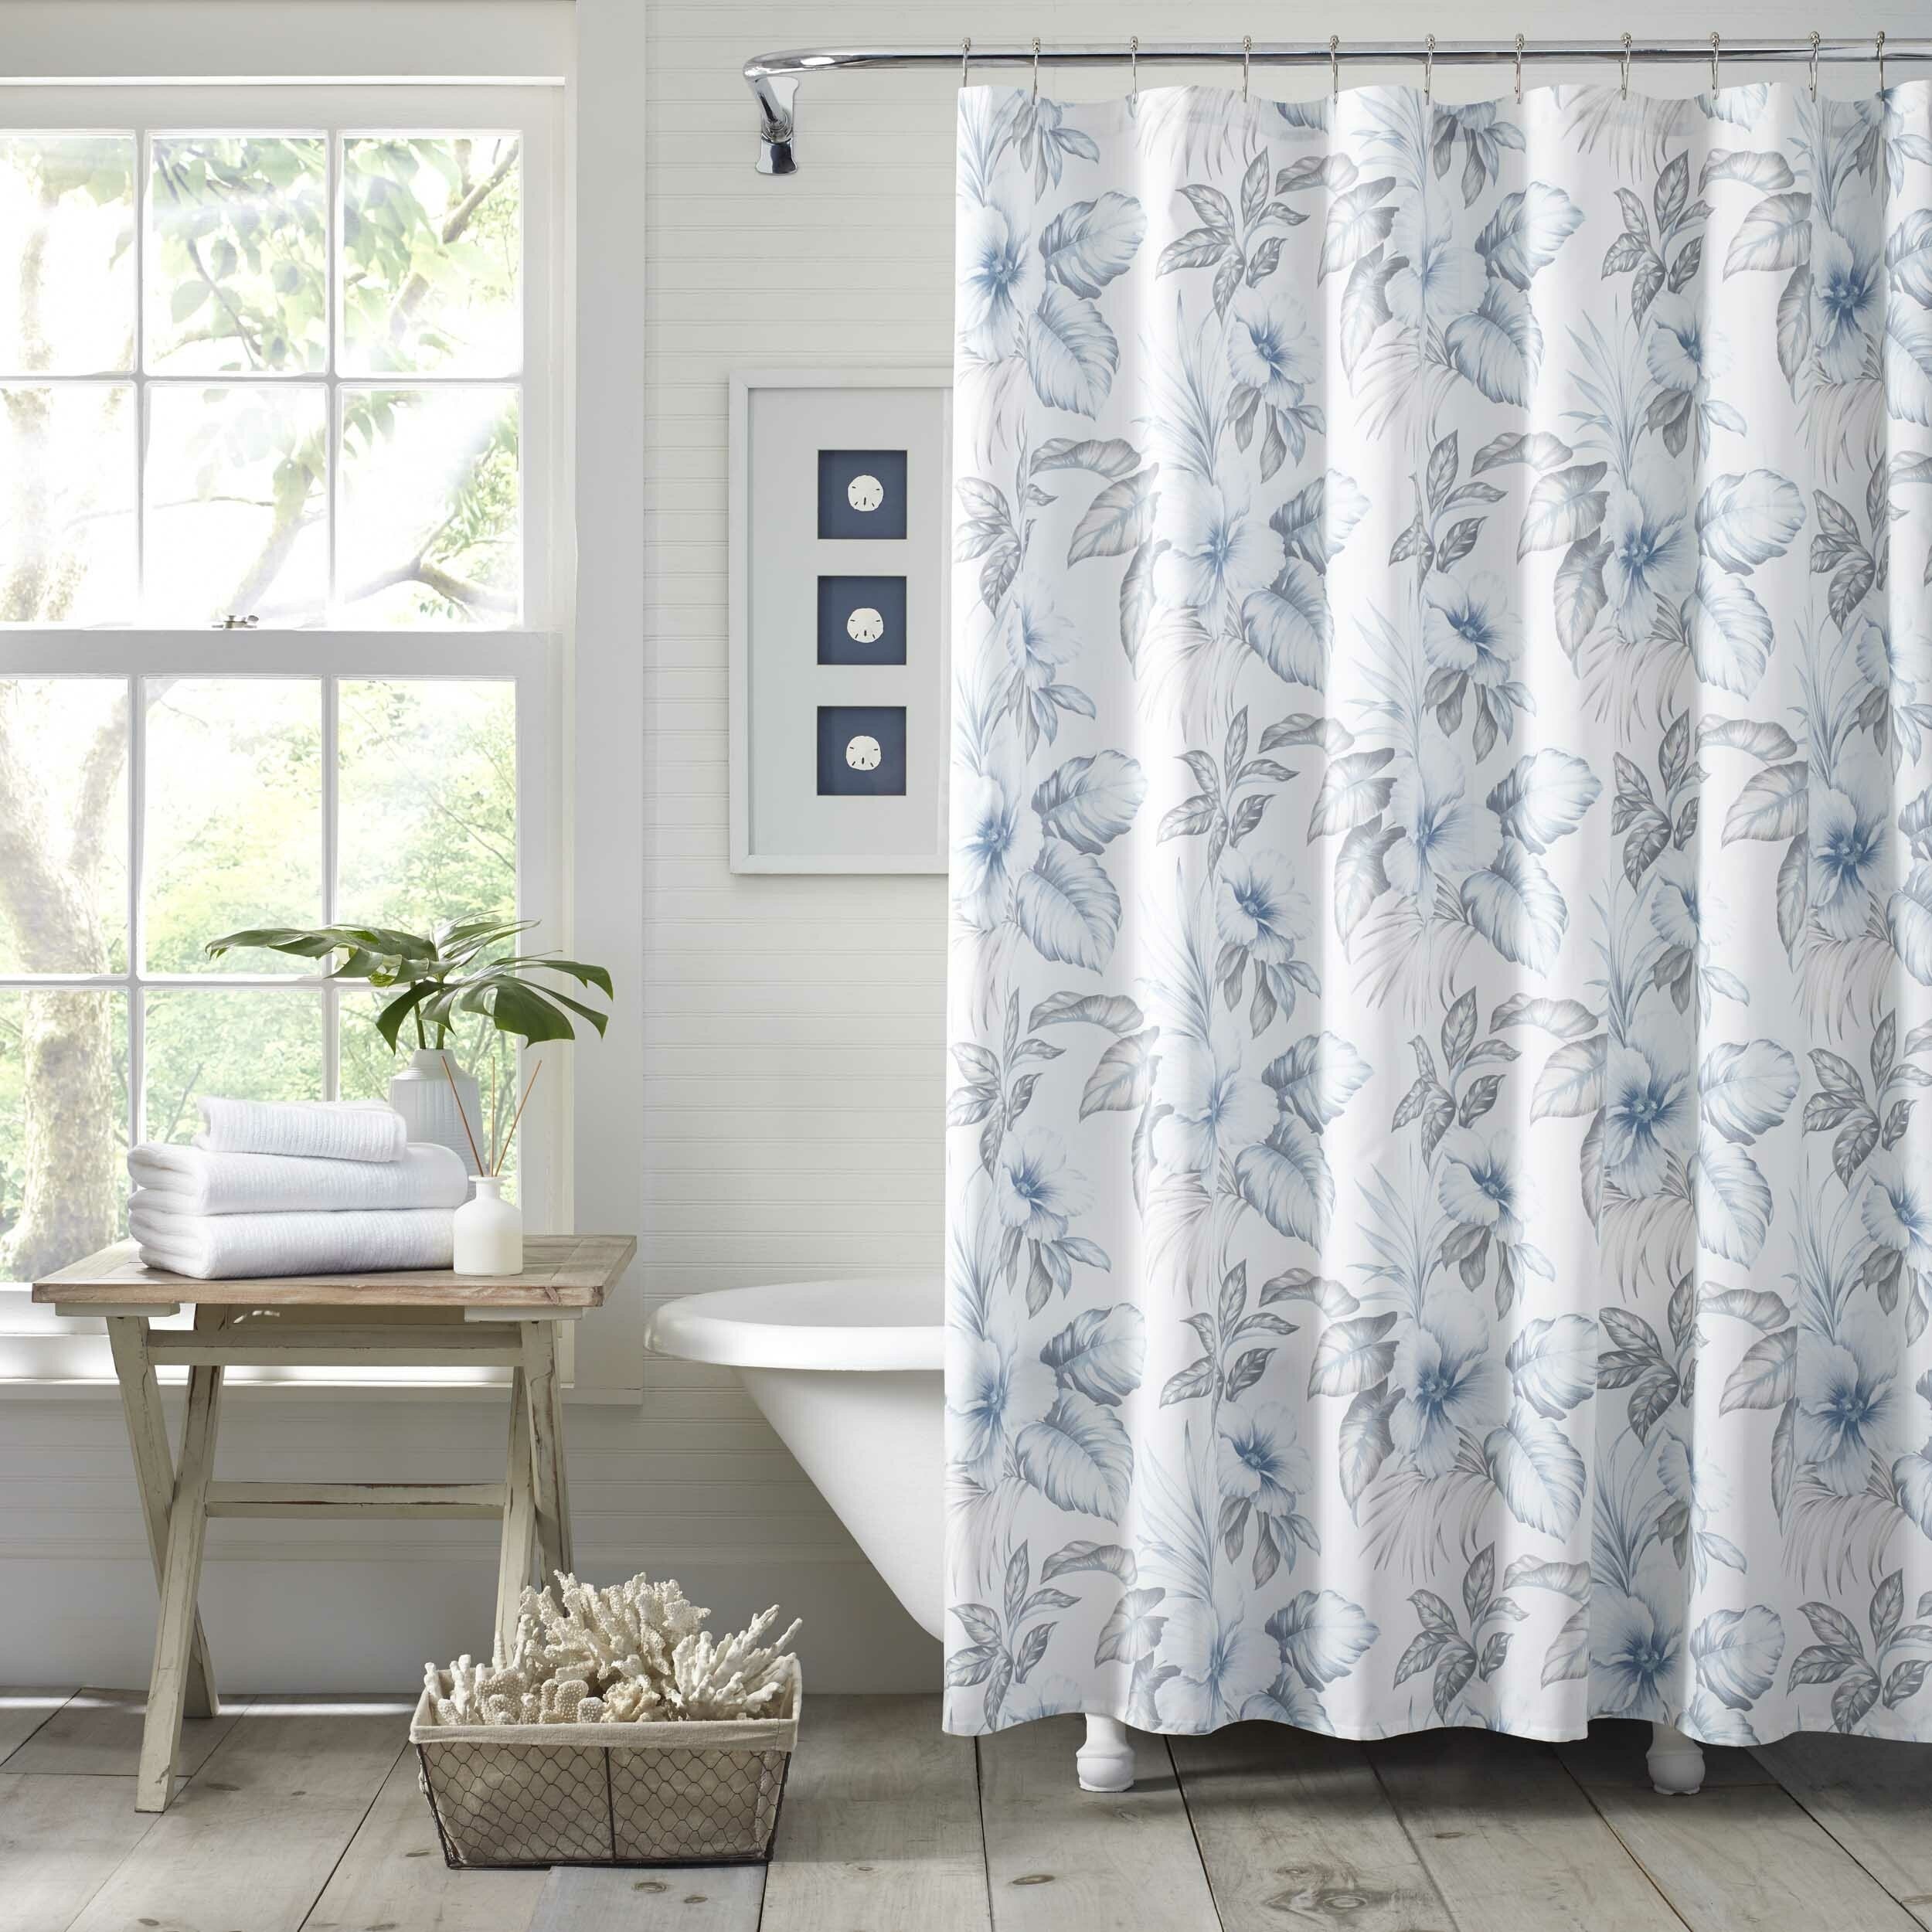 Choosing a Shower Curtain Alternative